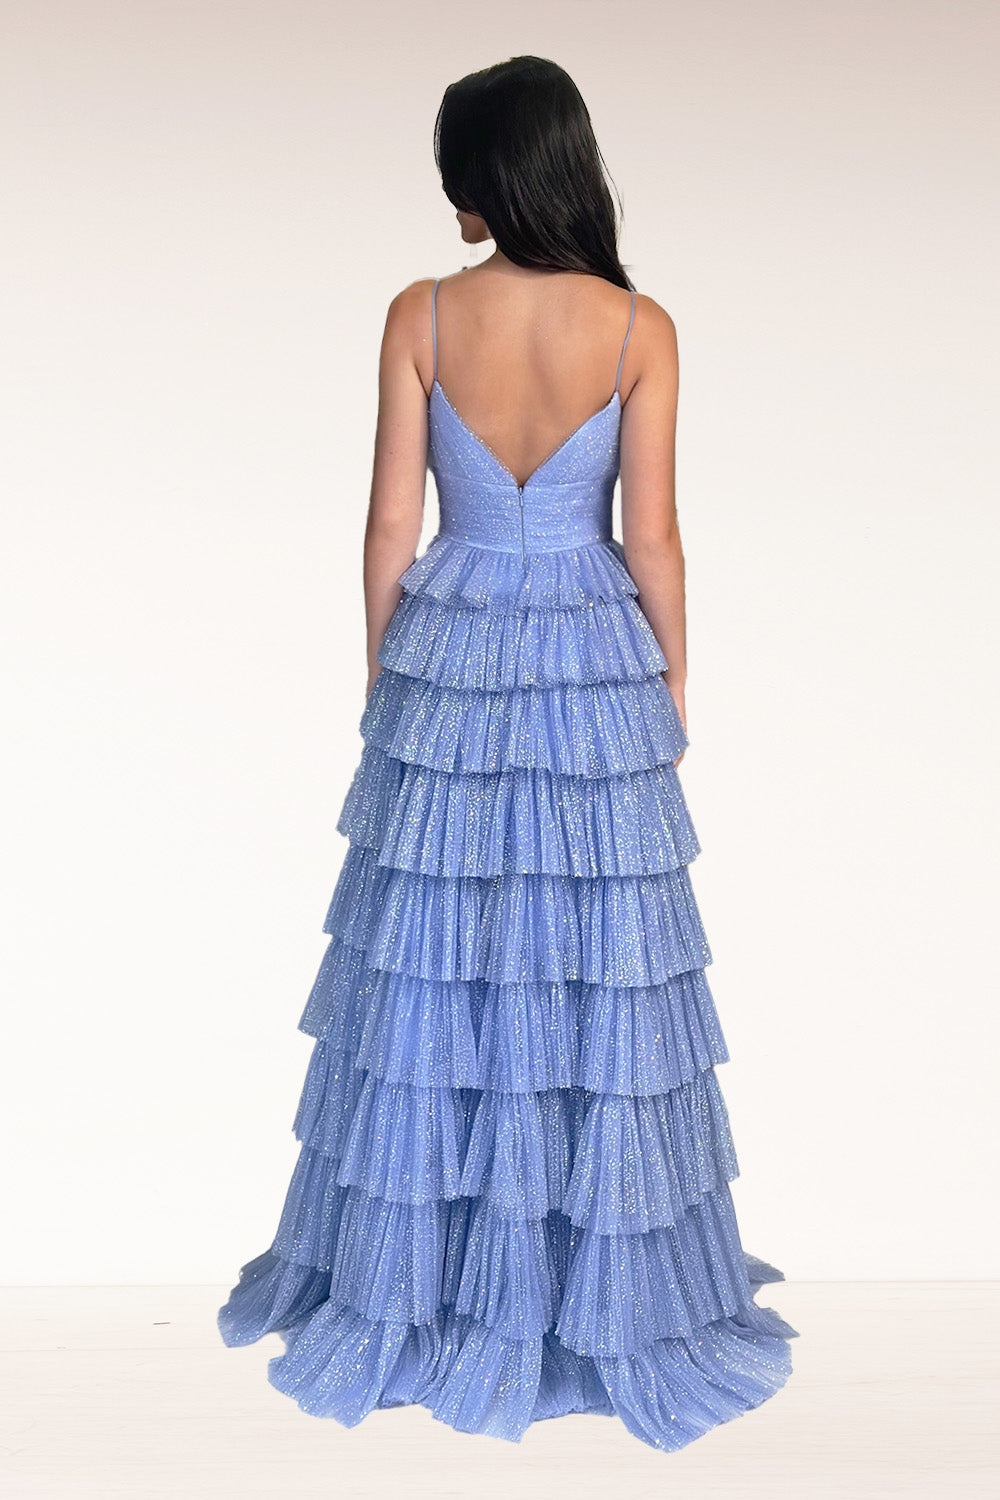 Lucci-Lu-1342-Deep-V-Neckline-V-Shaped-Back-Train-Glitter-Tulle-A-Line-Lilac-Evening-Dress-B-Chic-Fashions-Prom-Dress